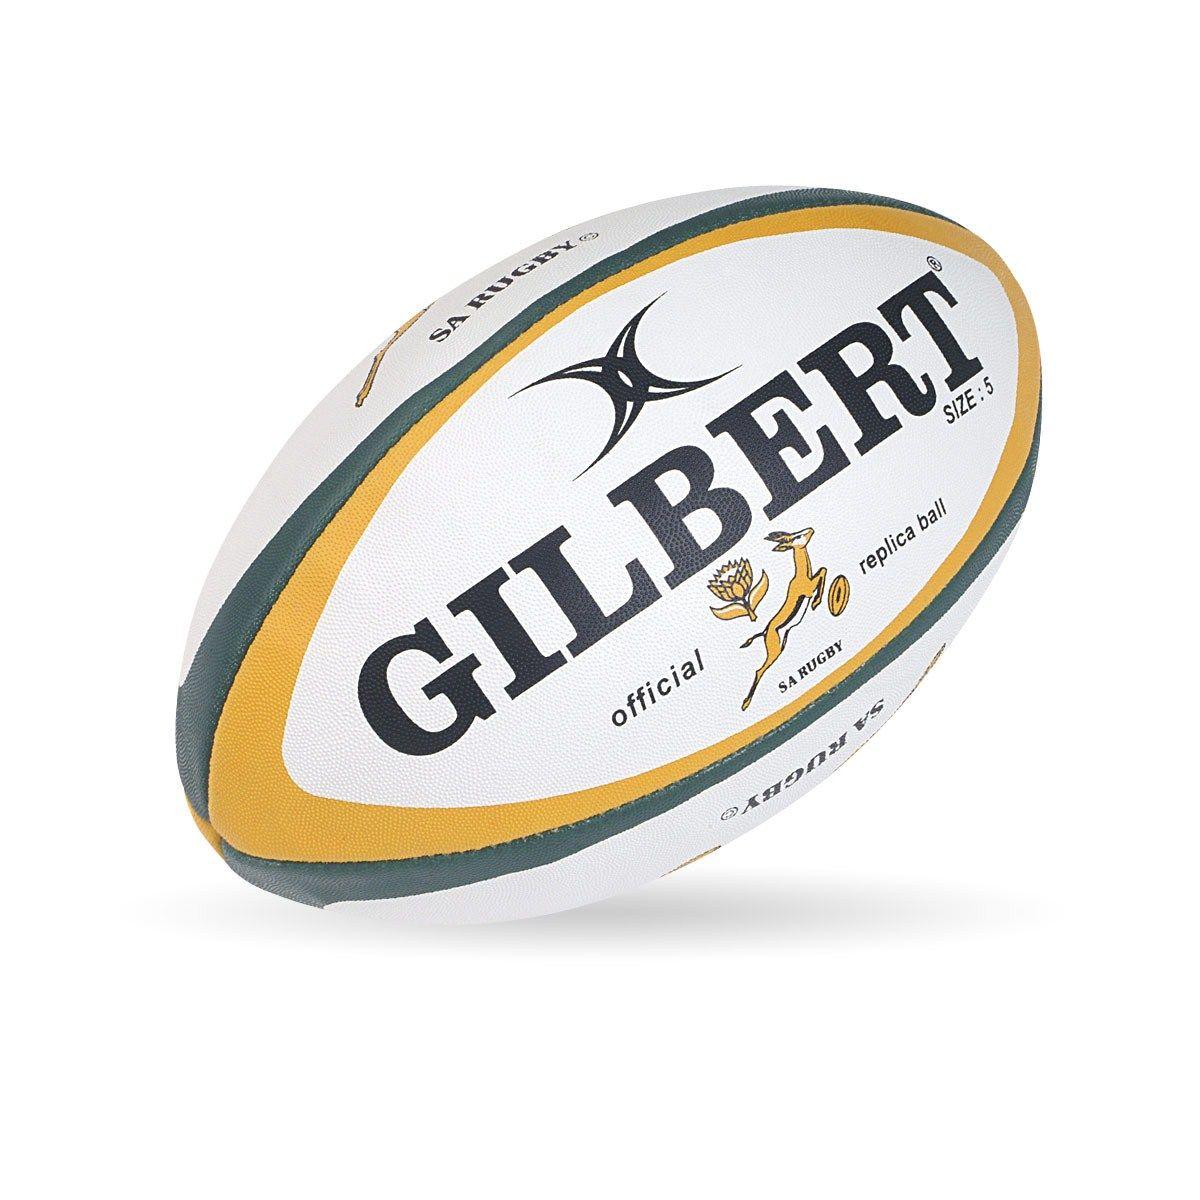 That S A Green Ball Logo - Gilbert Official South Africa Replica Ball | rugbystore